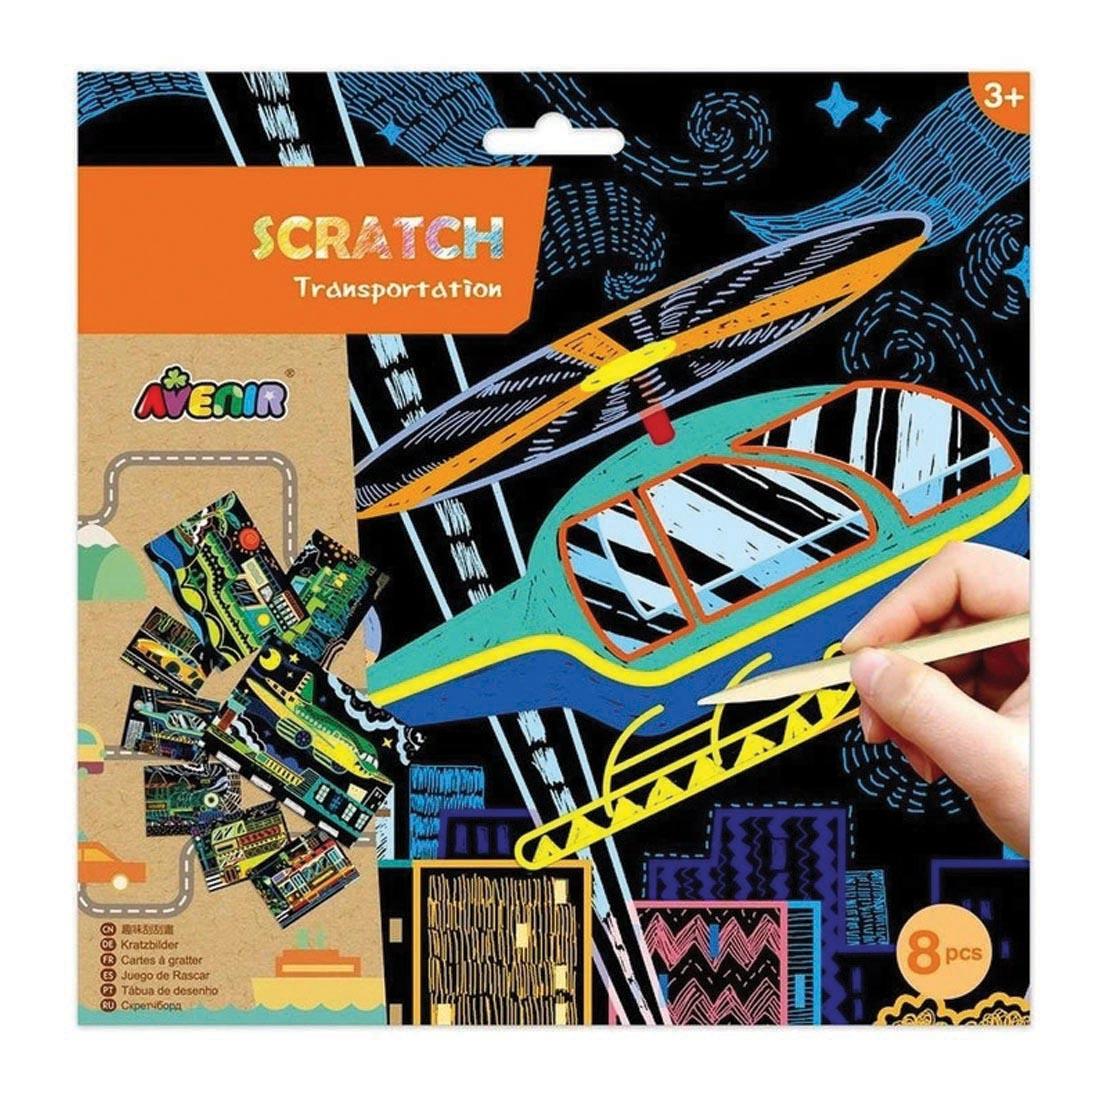 Transportation Scratch Junior Scratch Pages by Avenir